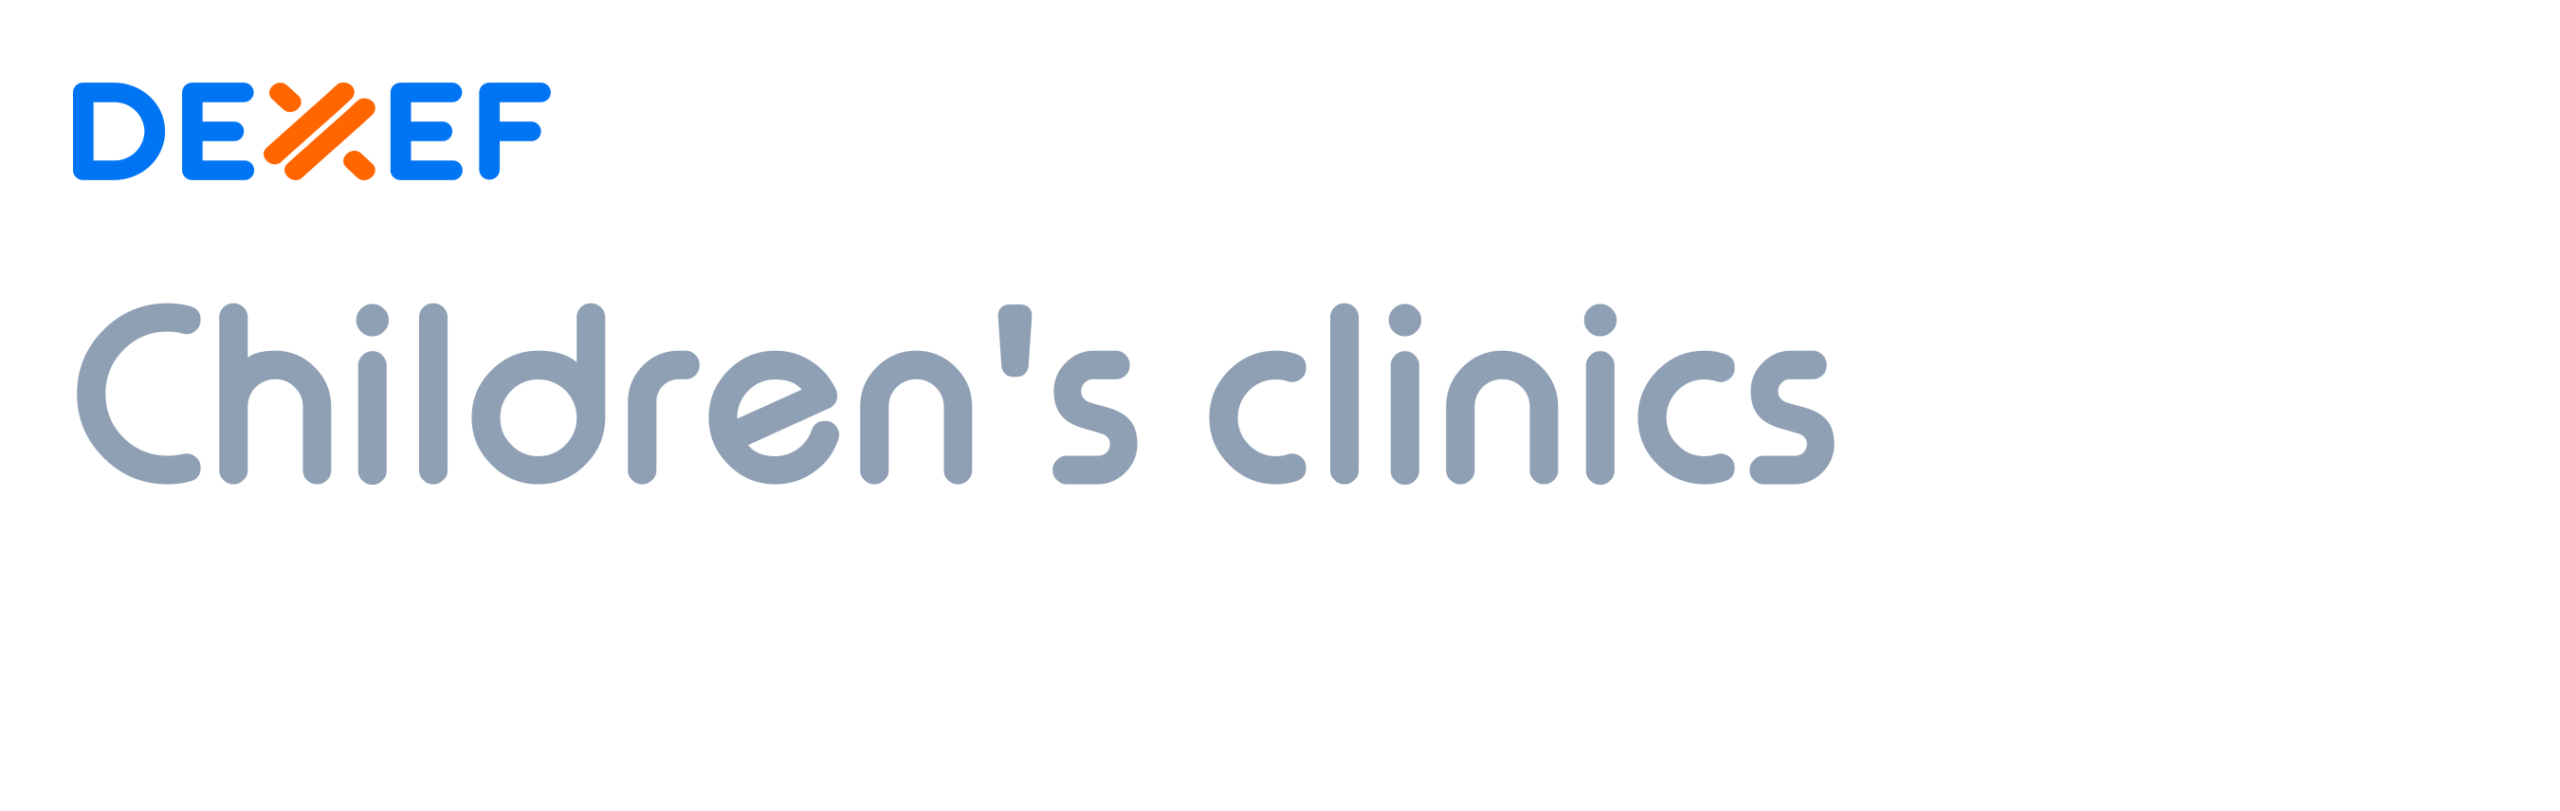 Children's clinics